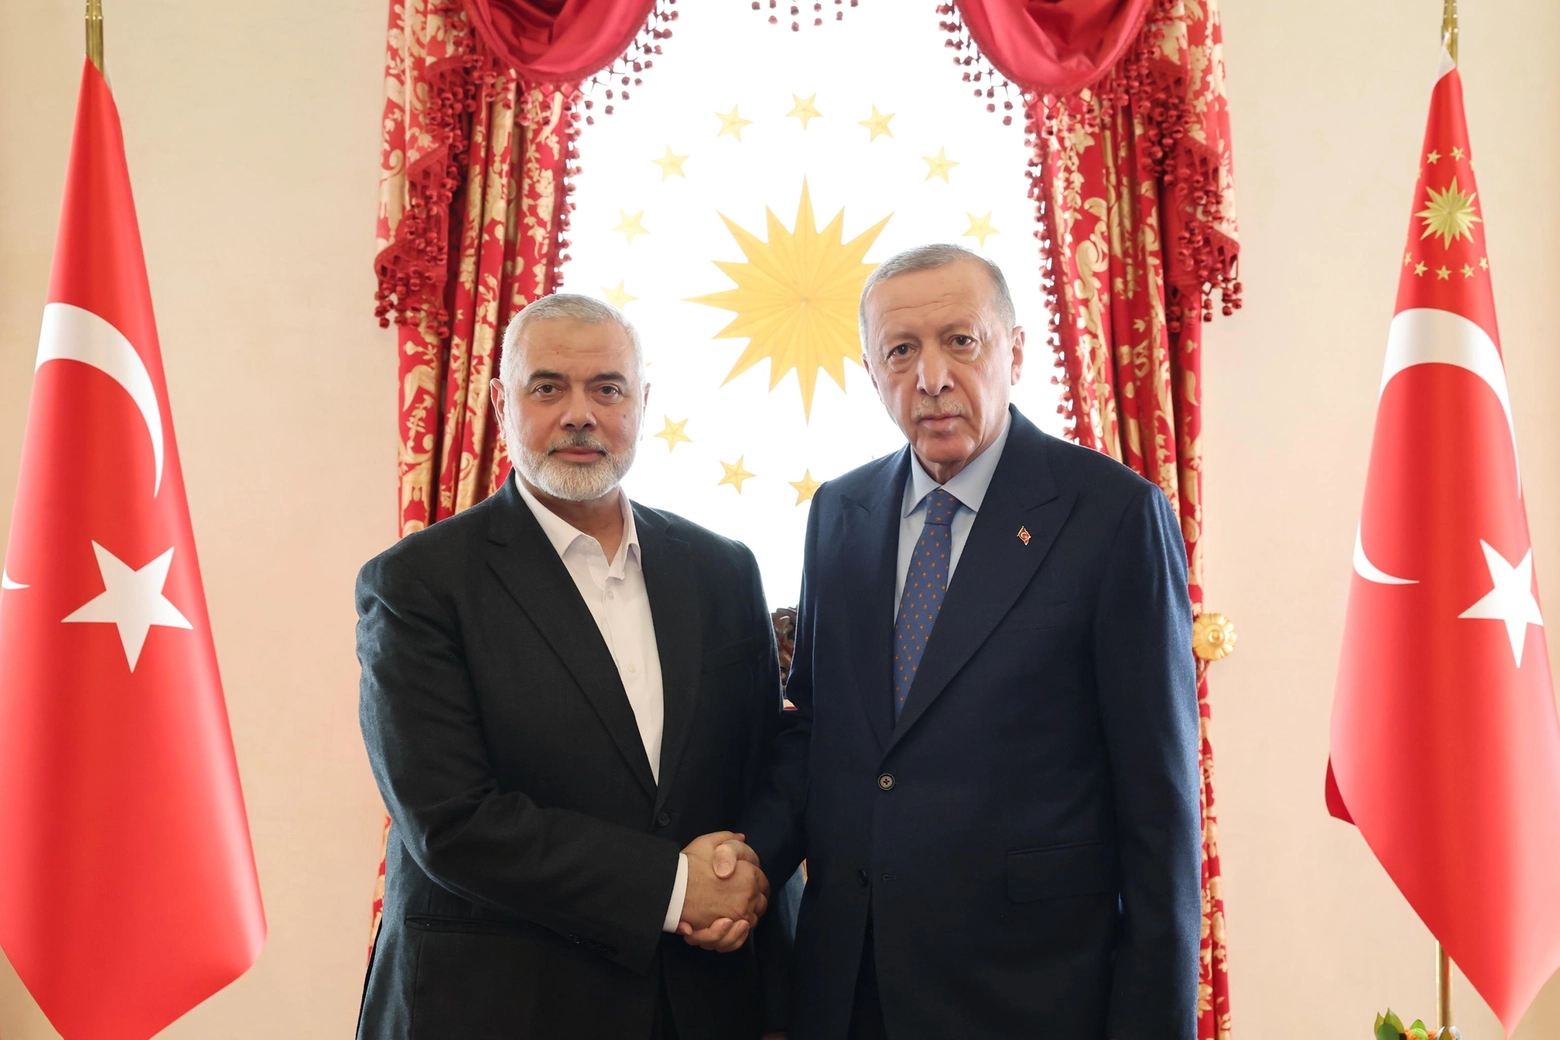 Il leader politico di Hamas, Ismail Haniyeh, con il presidente turco Recep Tayyip Erdogan